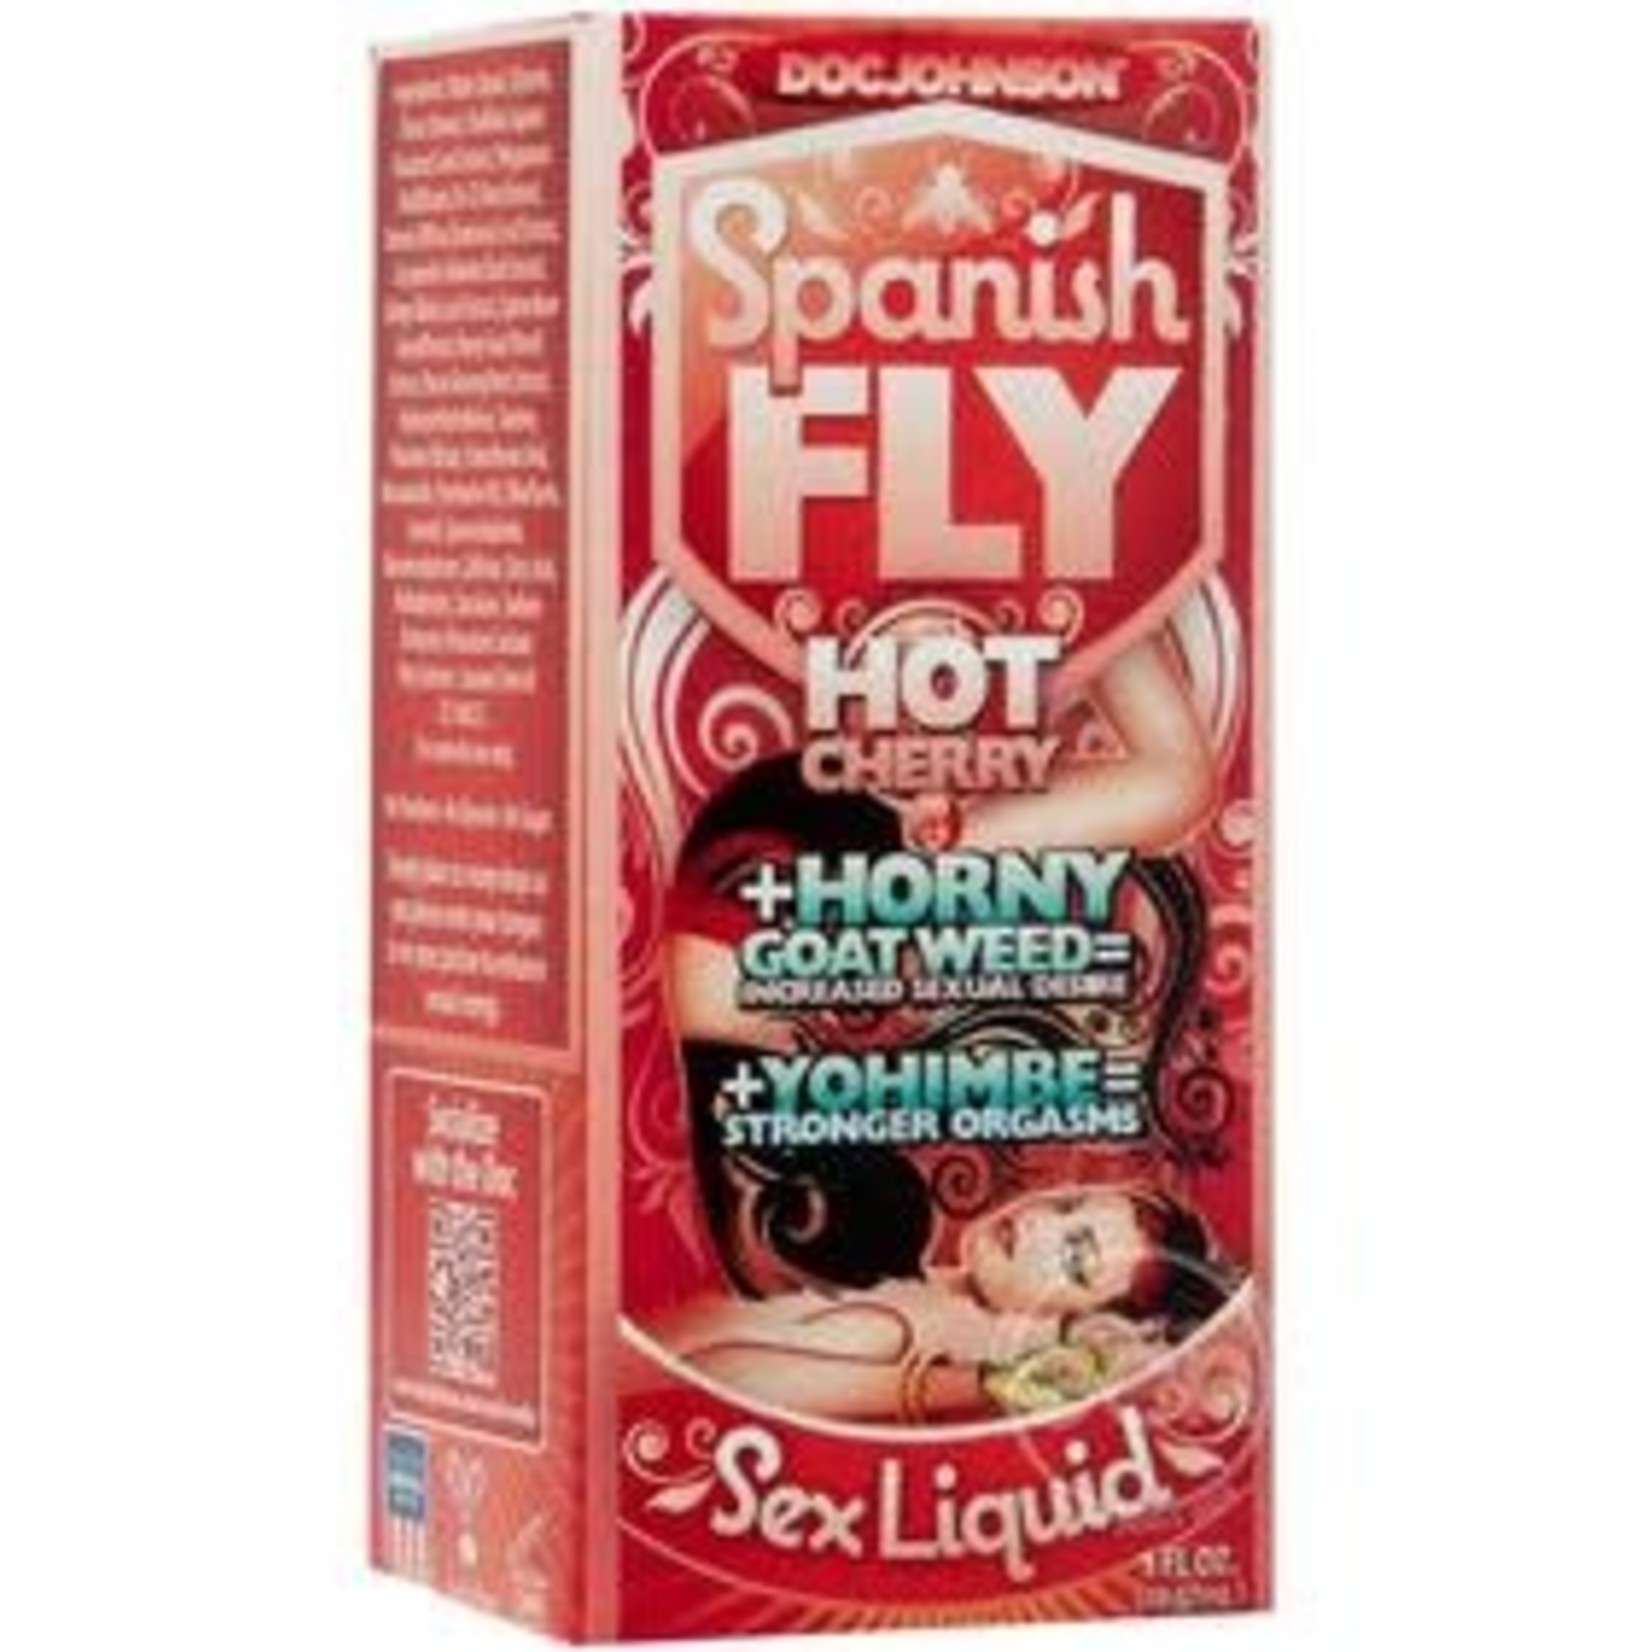 Spanish Fly Sex Drops Hot Cherry 1oz